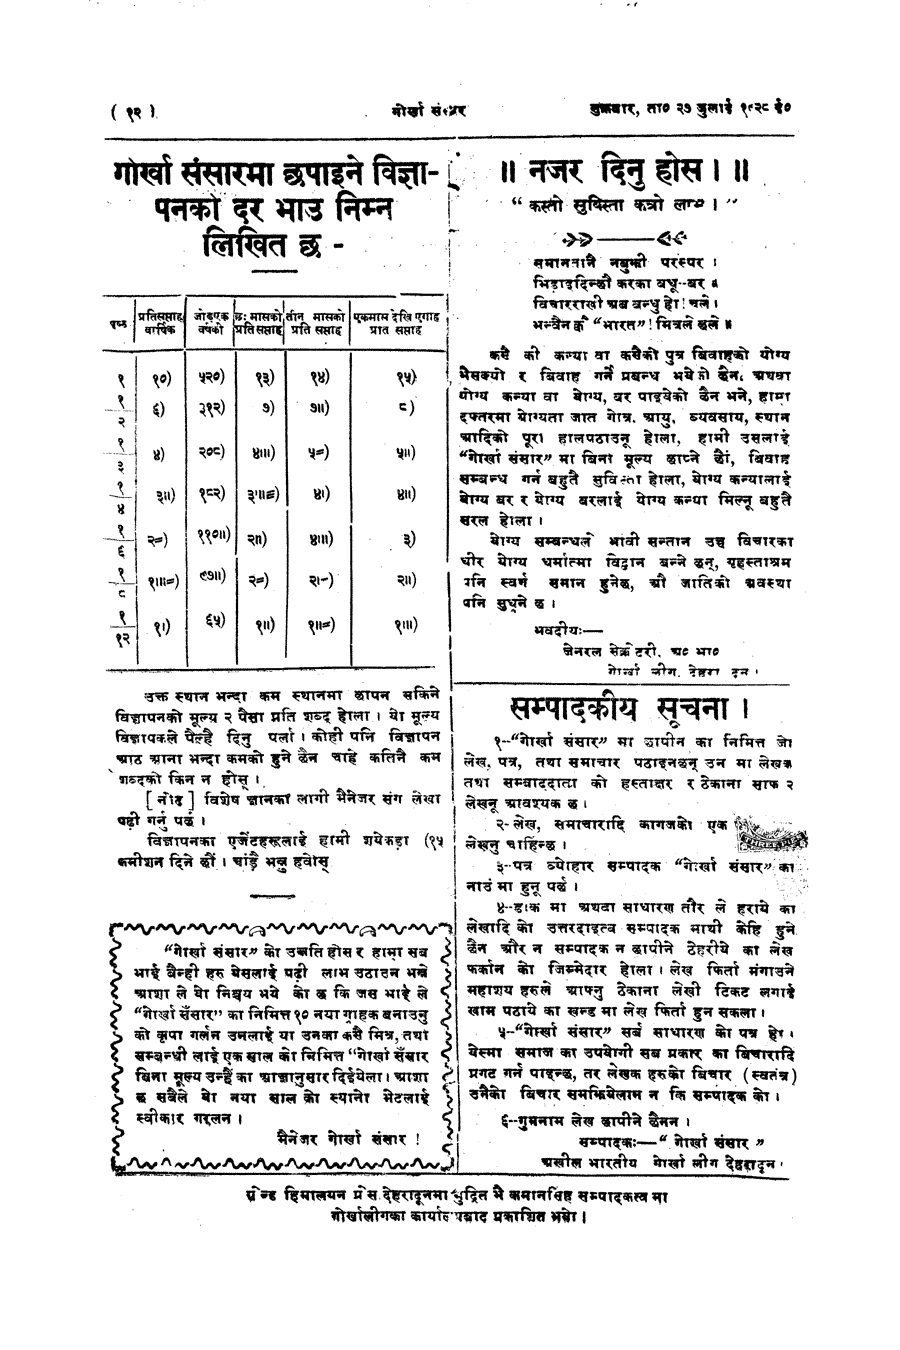 Gorkha Sansar, 27 July 1928, page 12